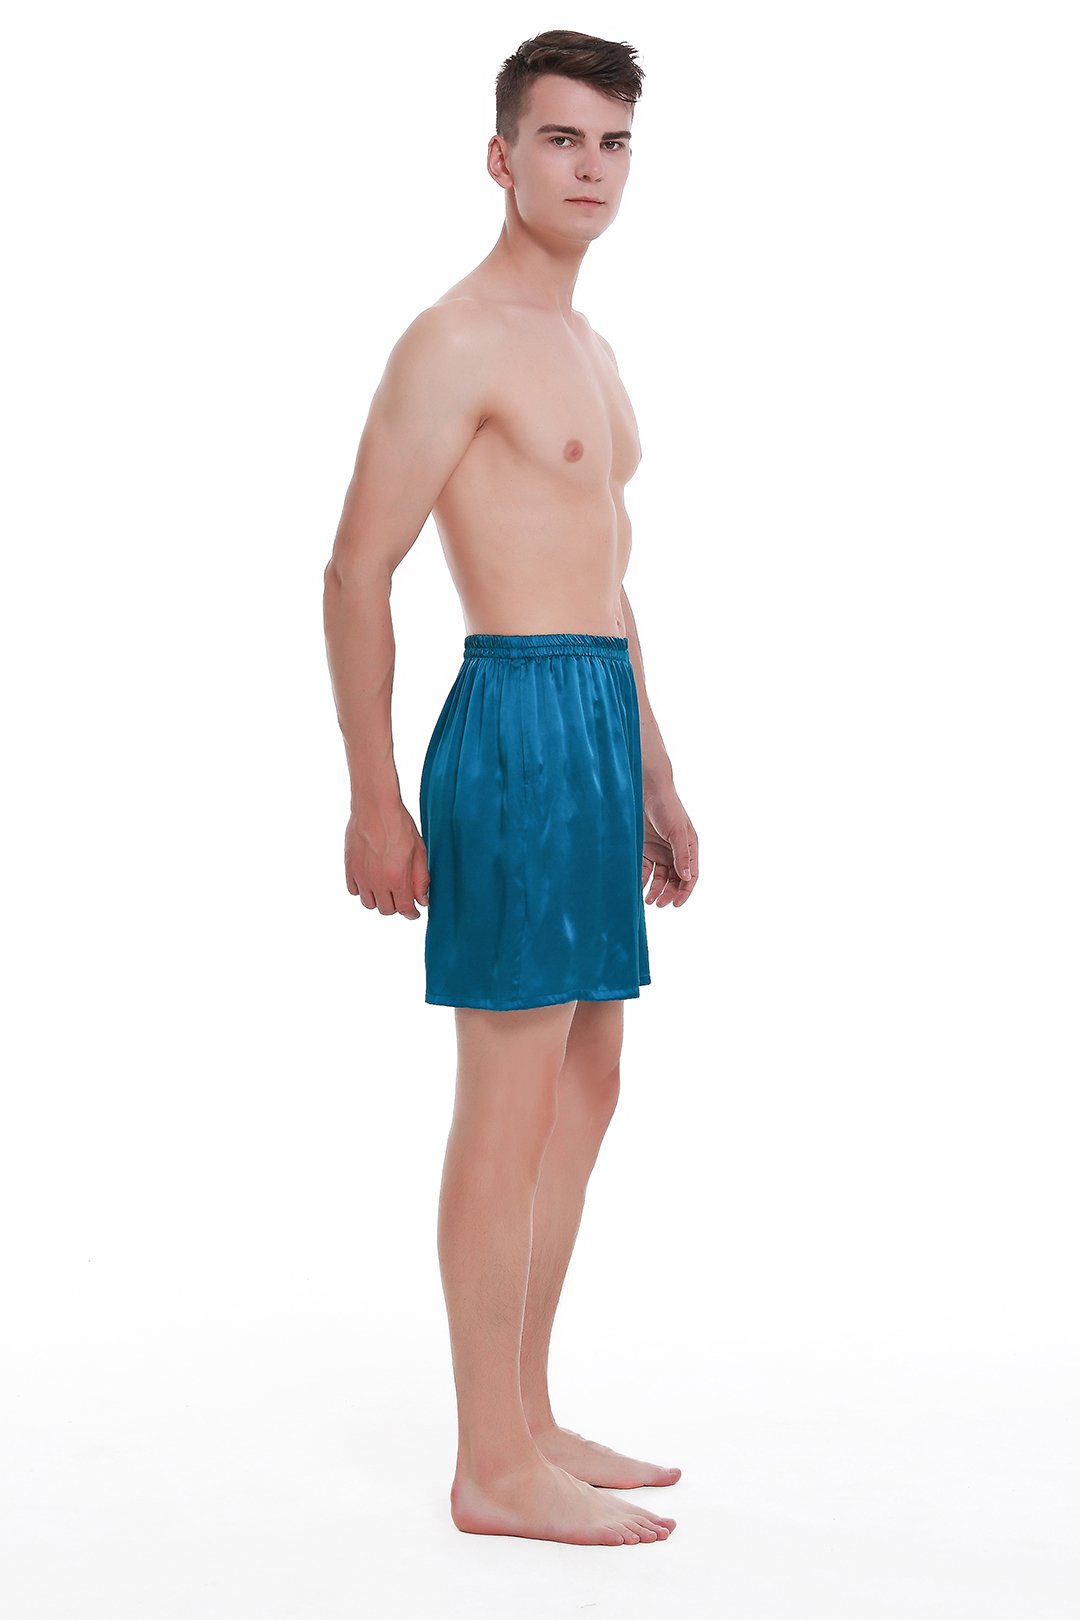 Lepton Men's Silk Shorts